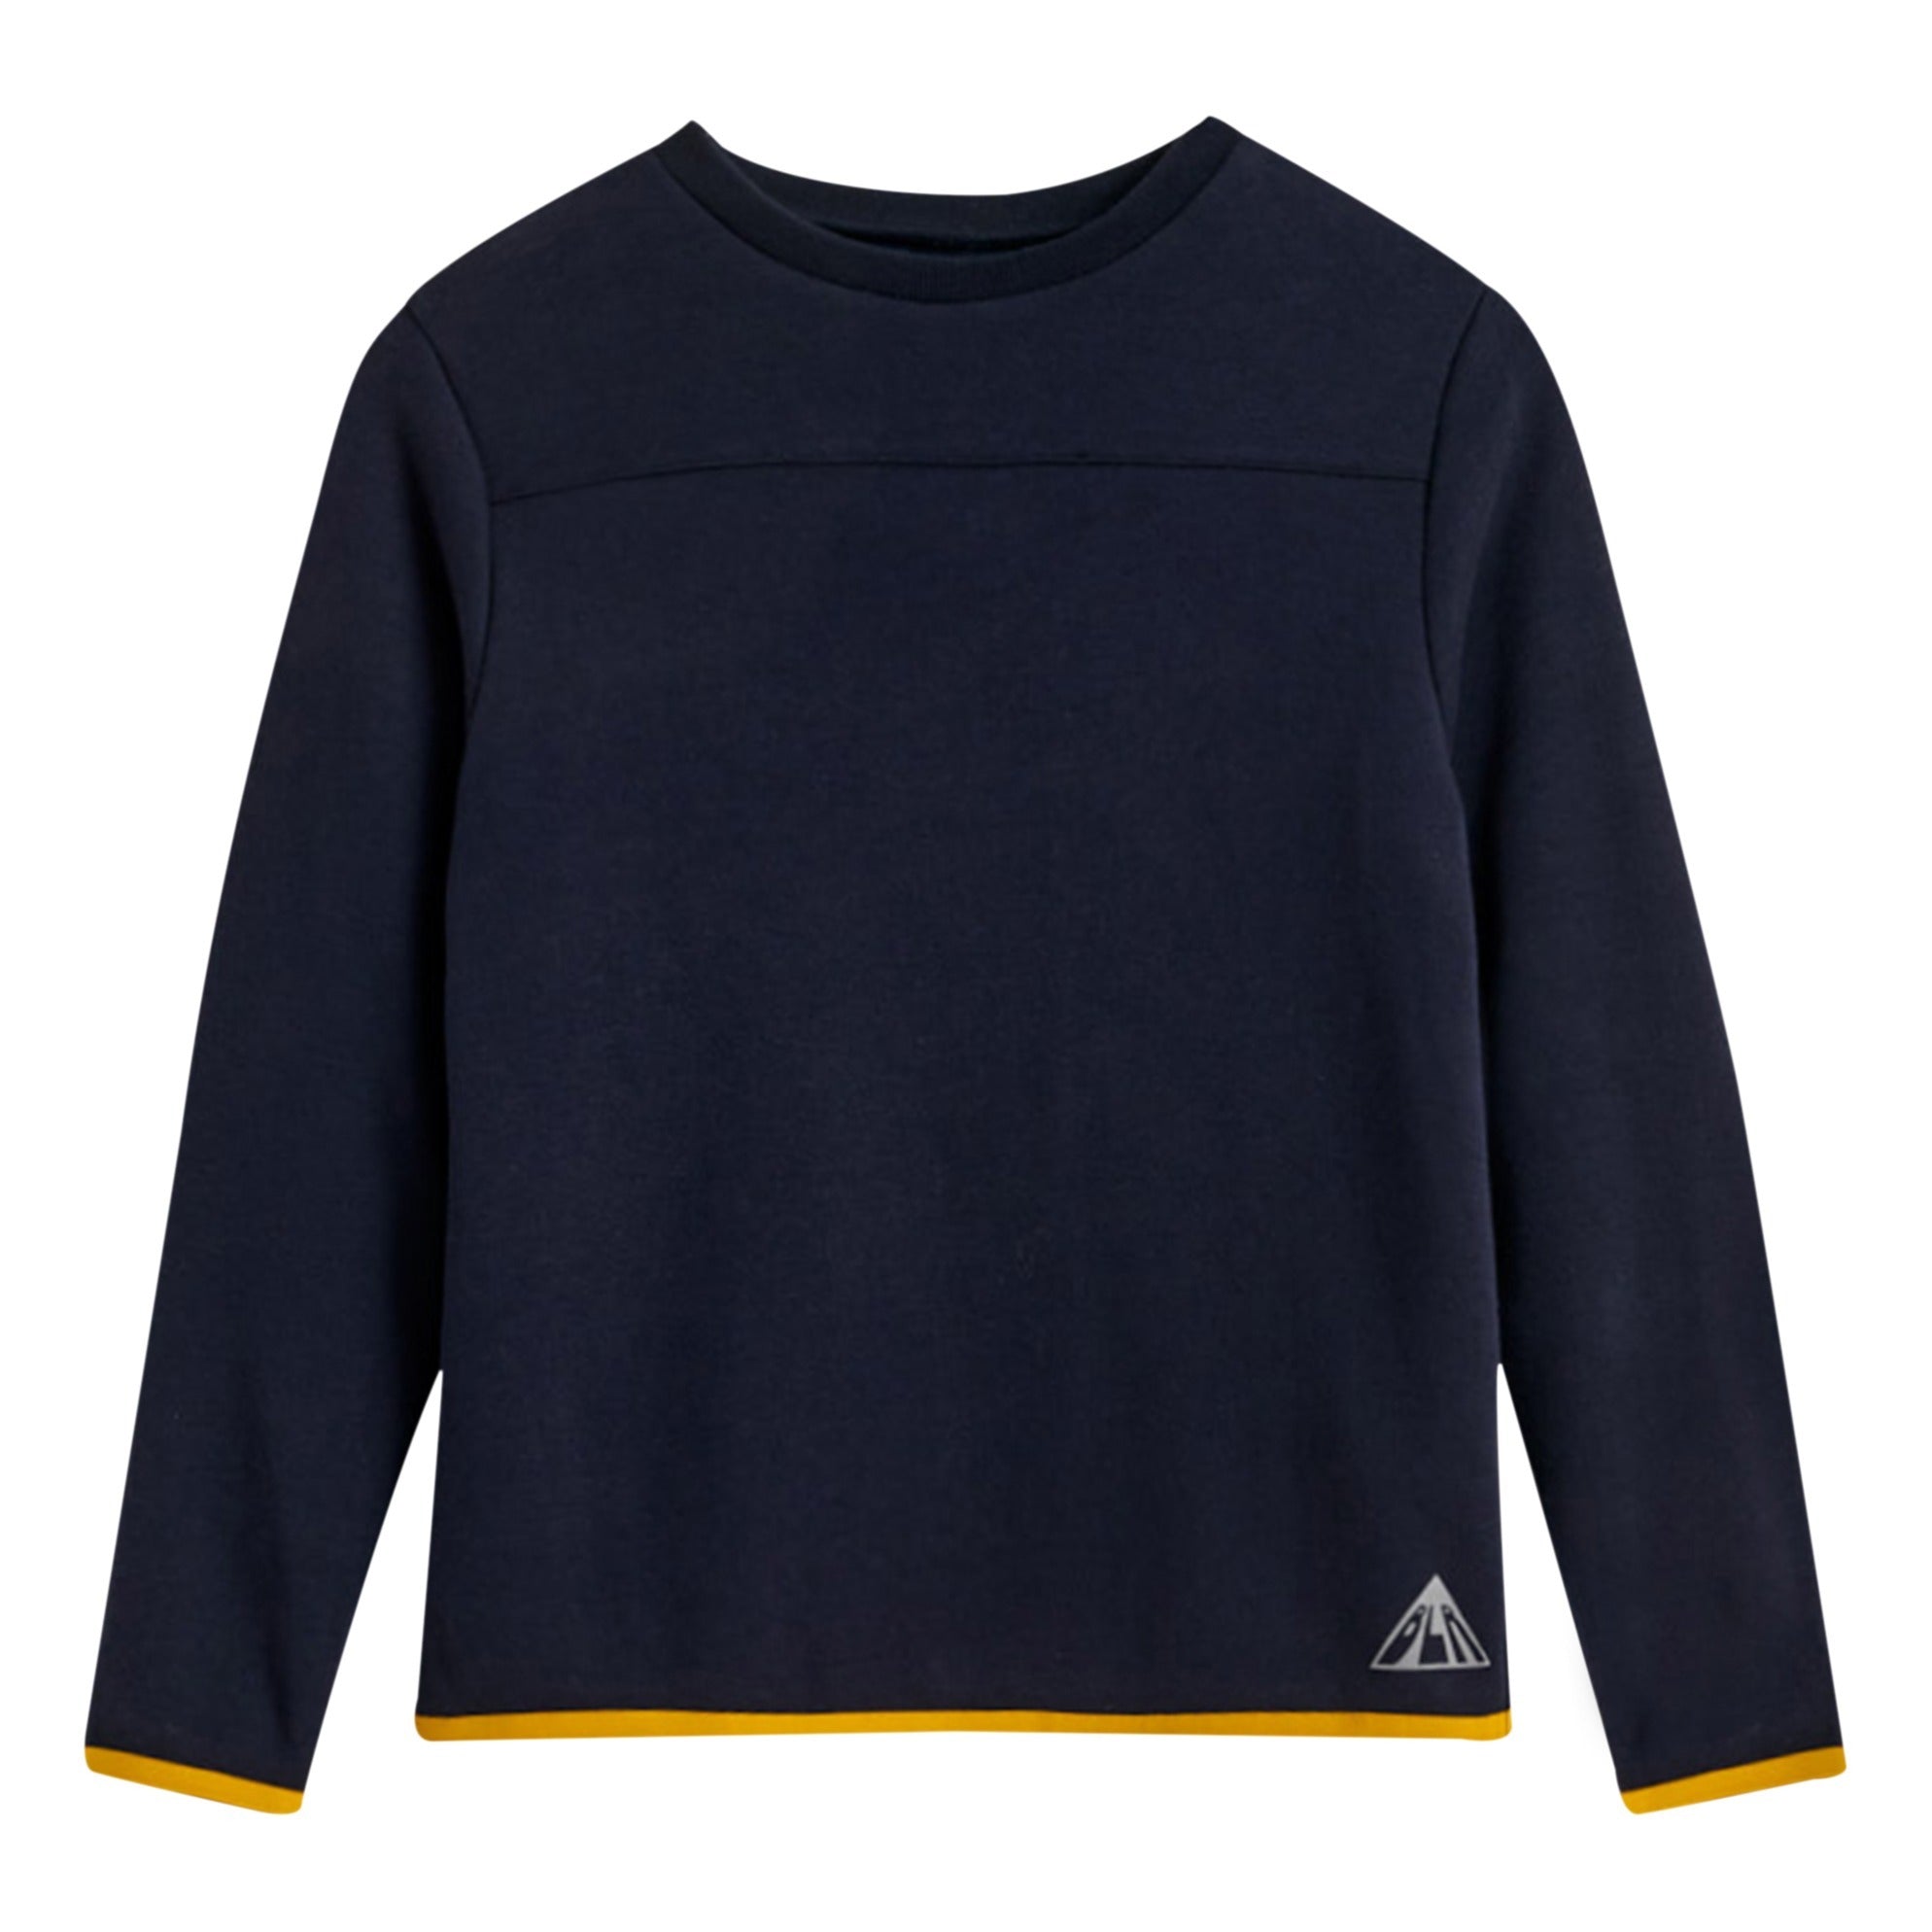 Alban Furry Sweatshirt Navy blue